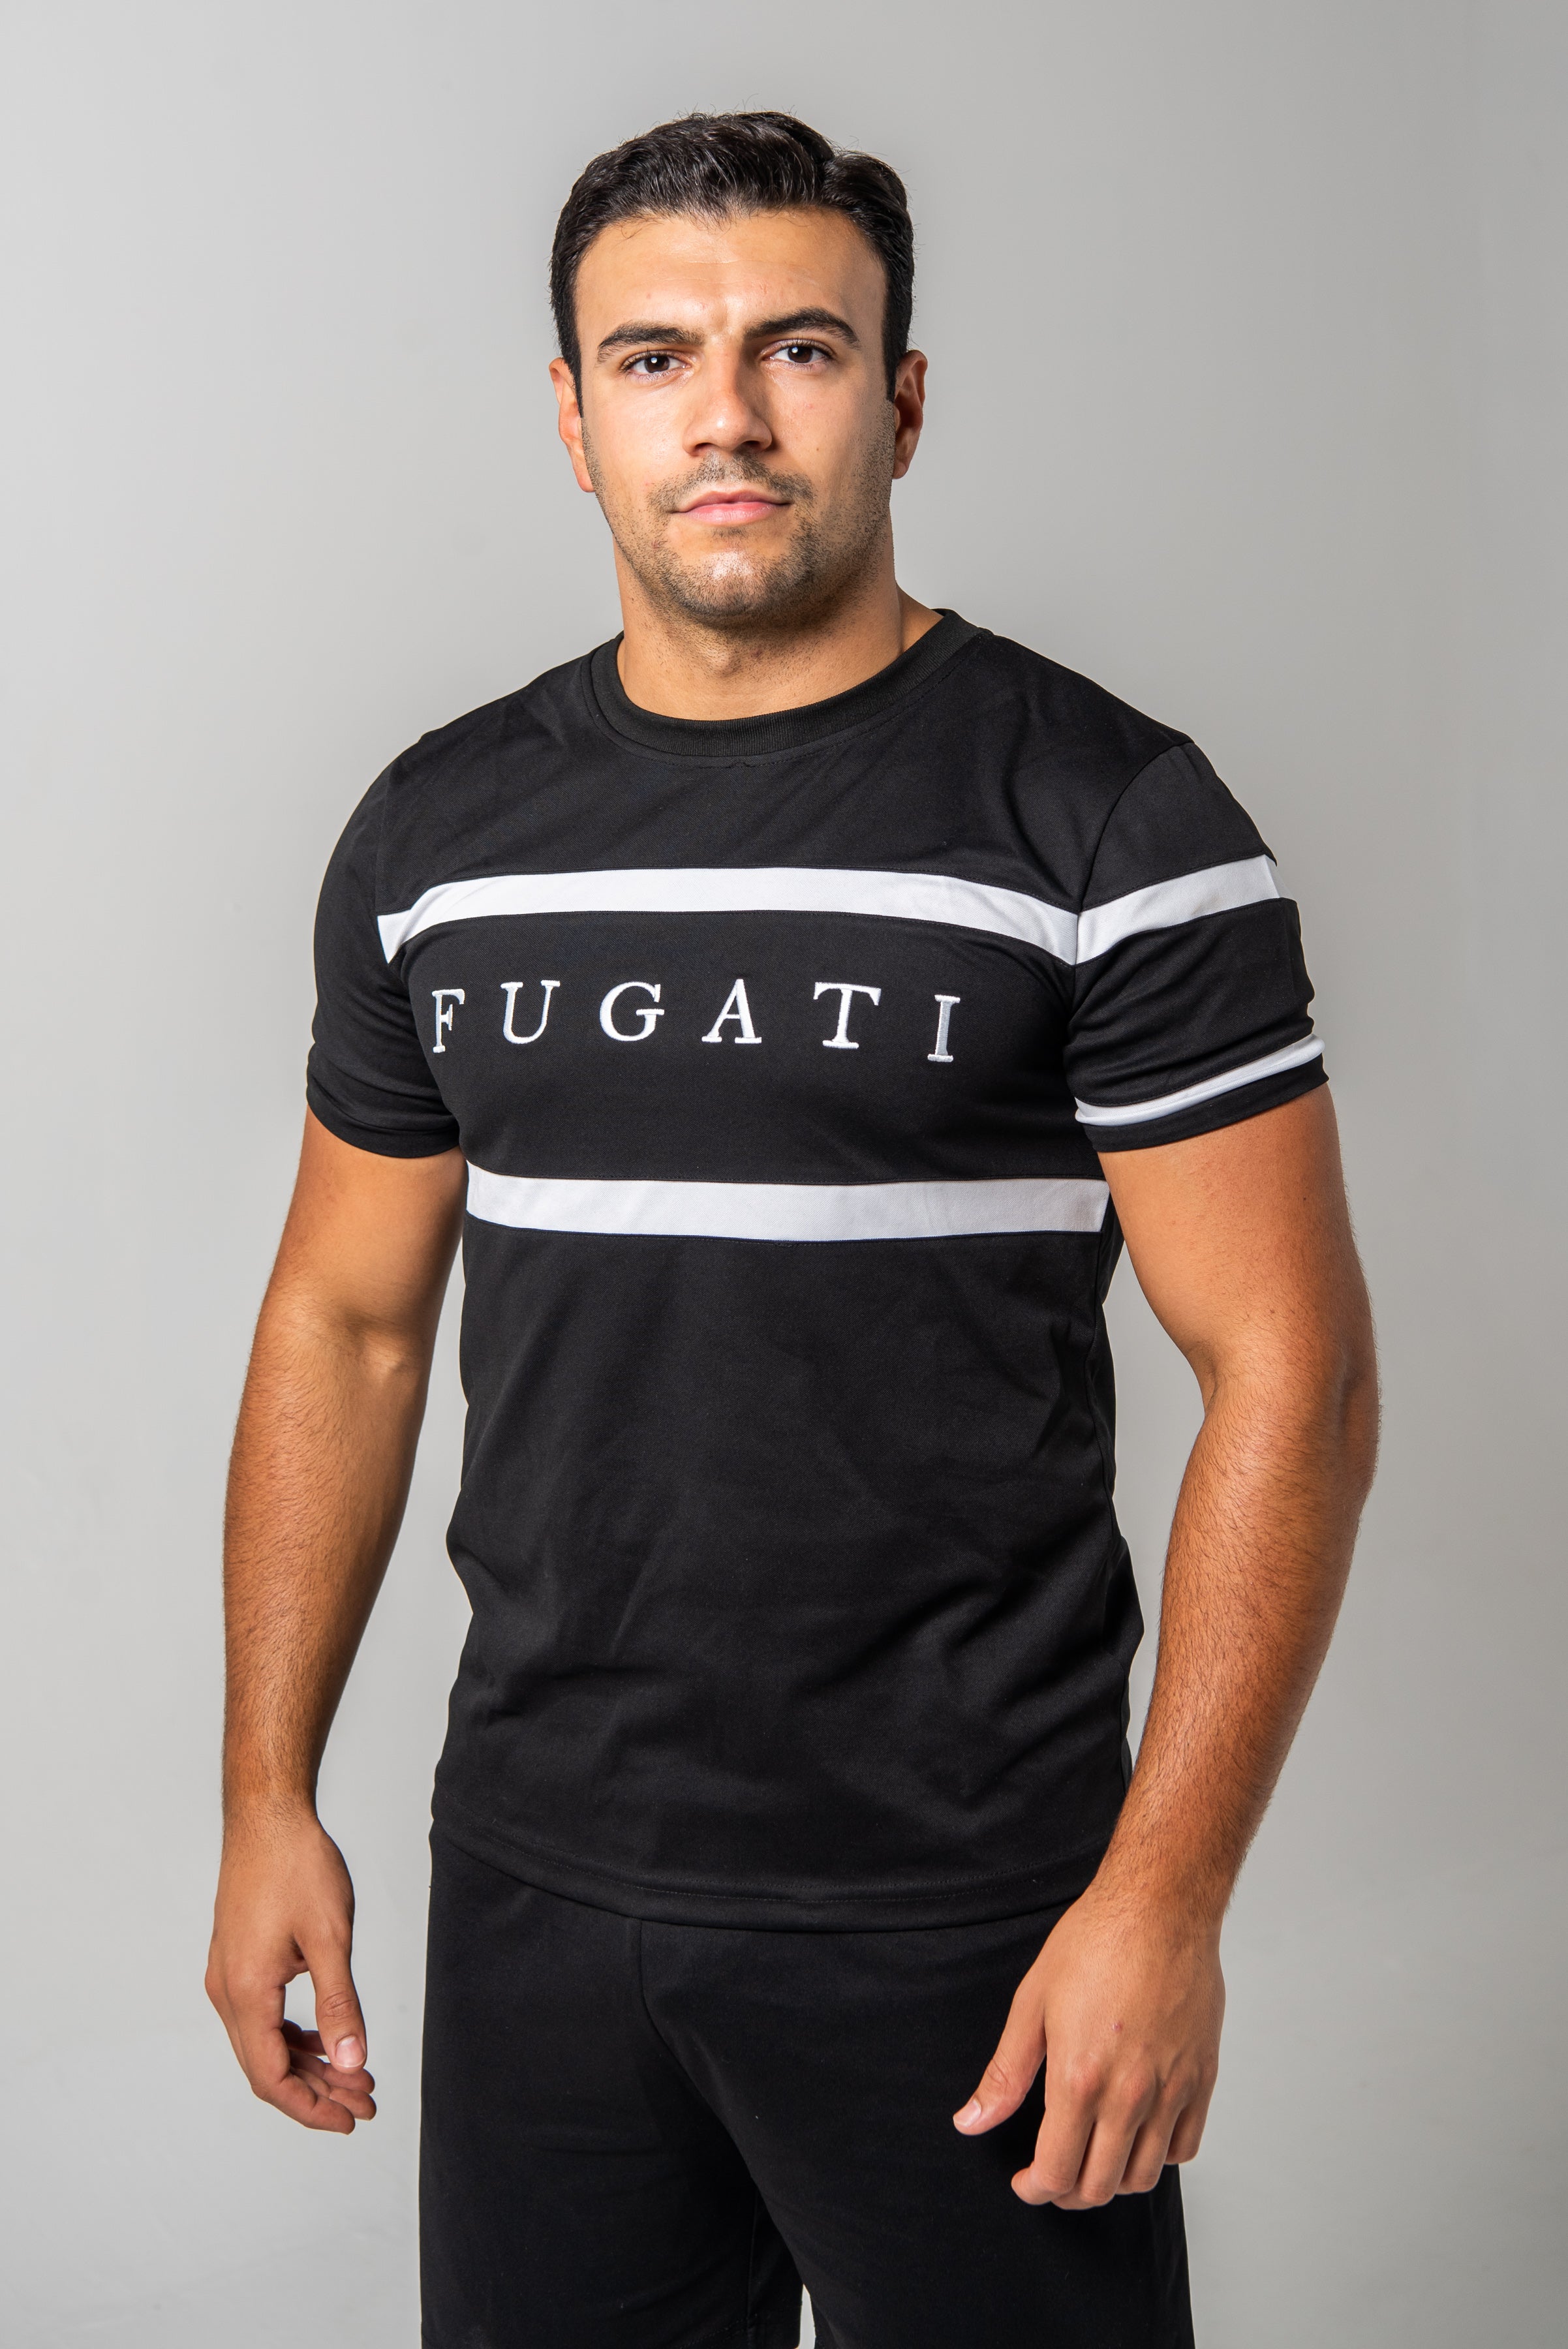 Fugati T-shirt - black